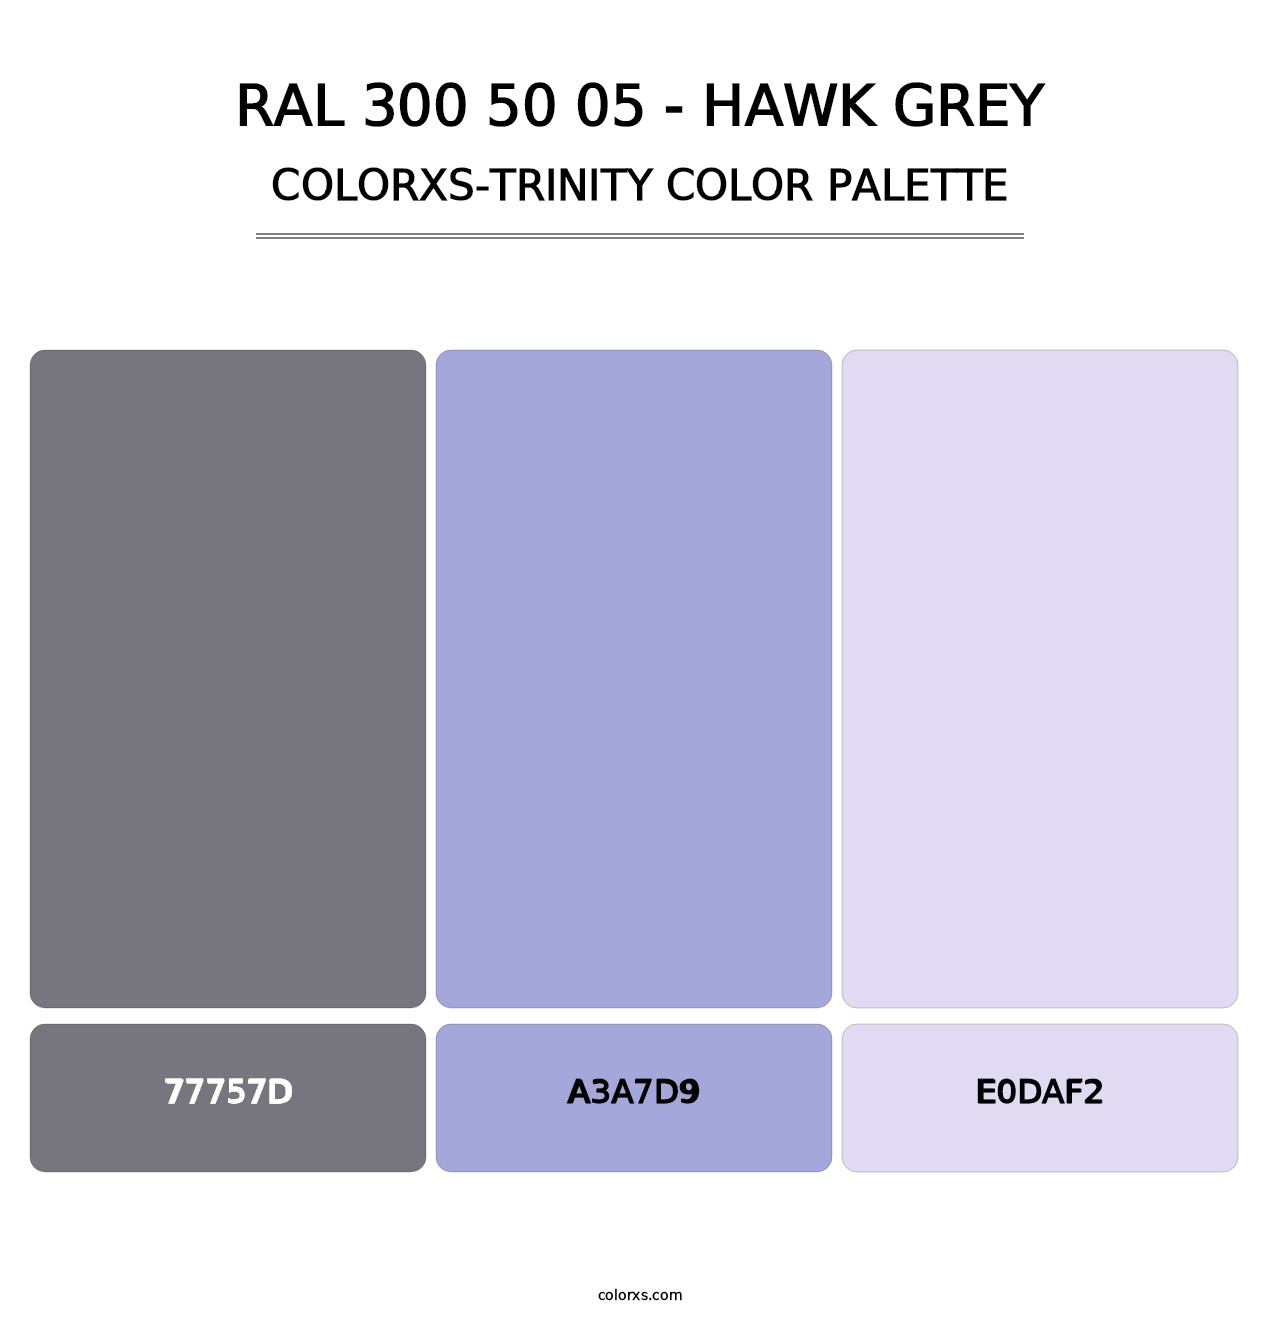 RAL 300 50 05 - Hawk Grey - Colorxs Trinity Palette